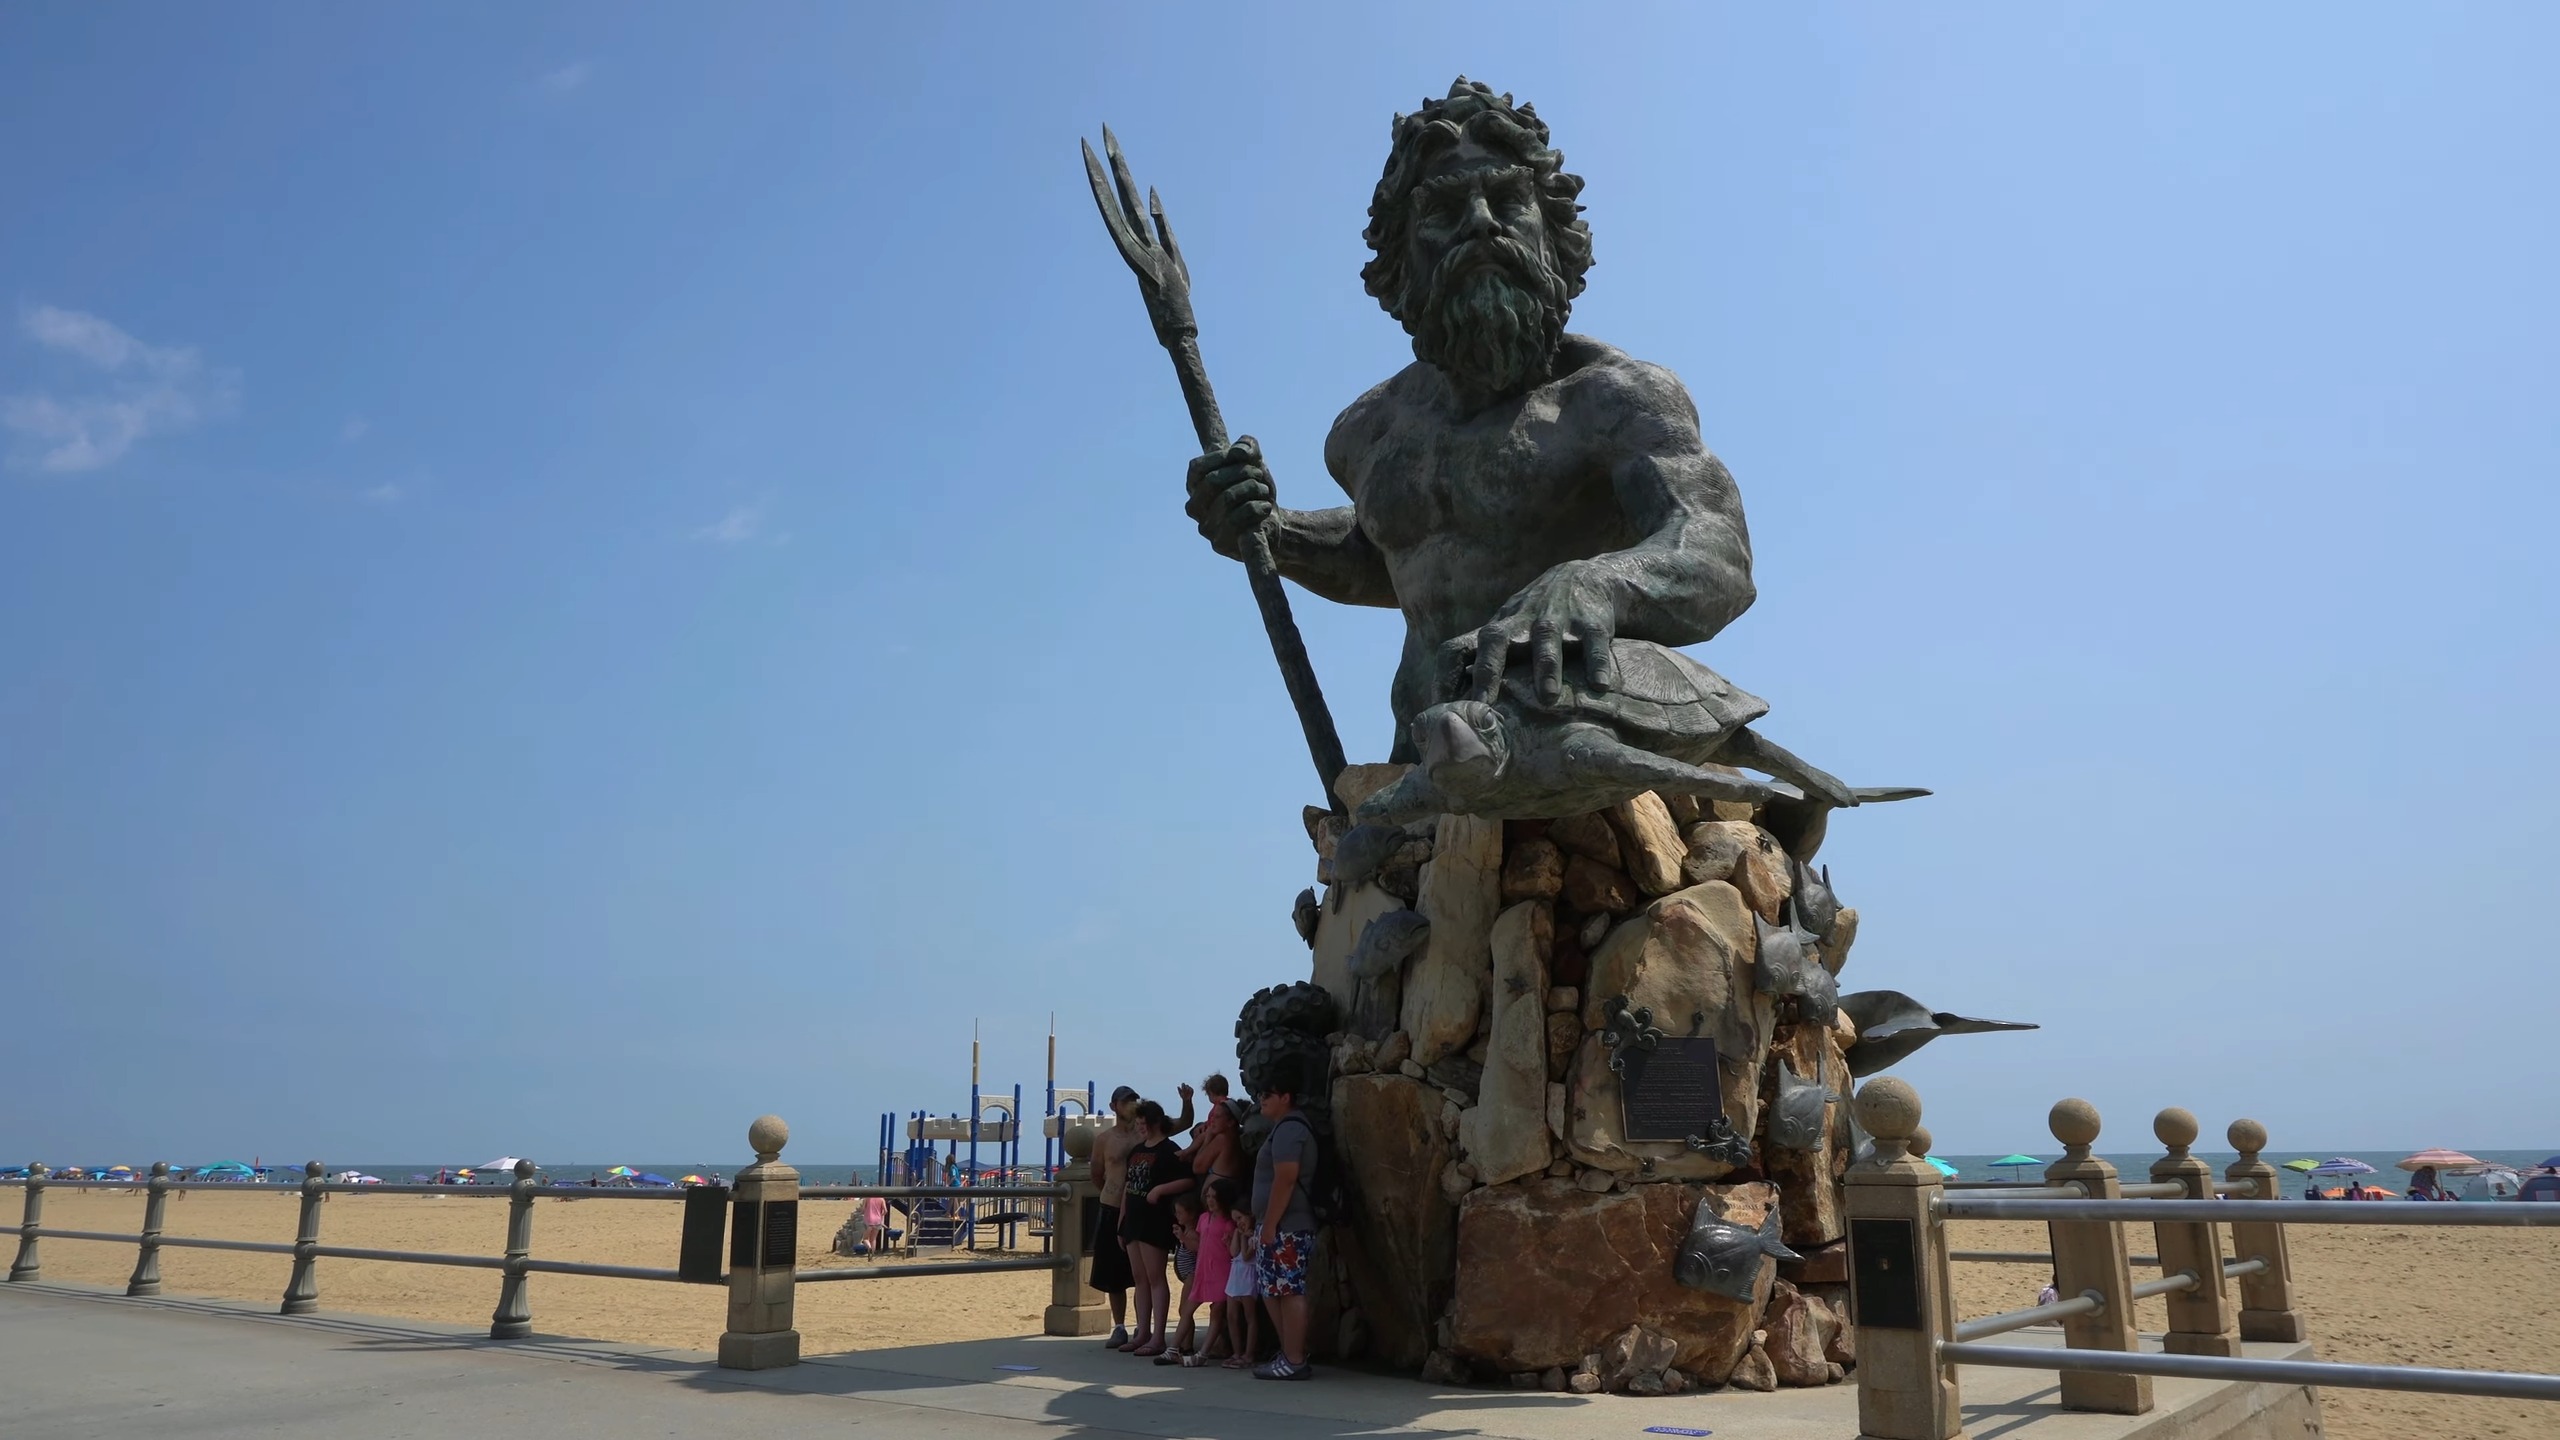 King Neptune Statue - Virginia Beach